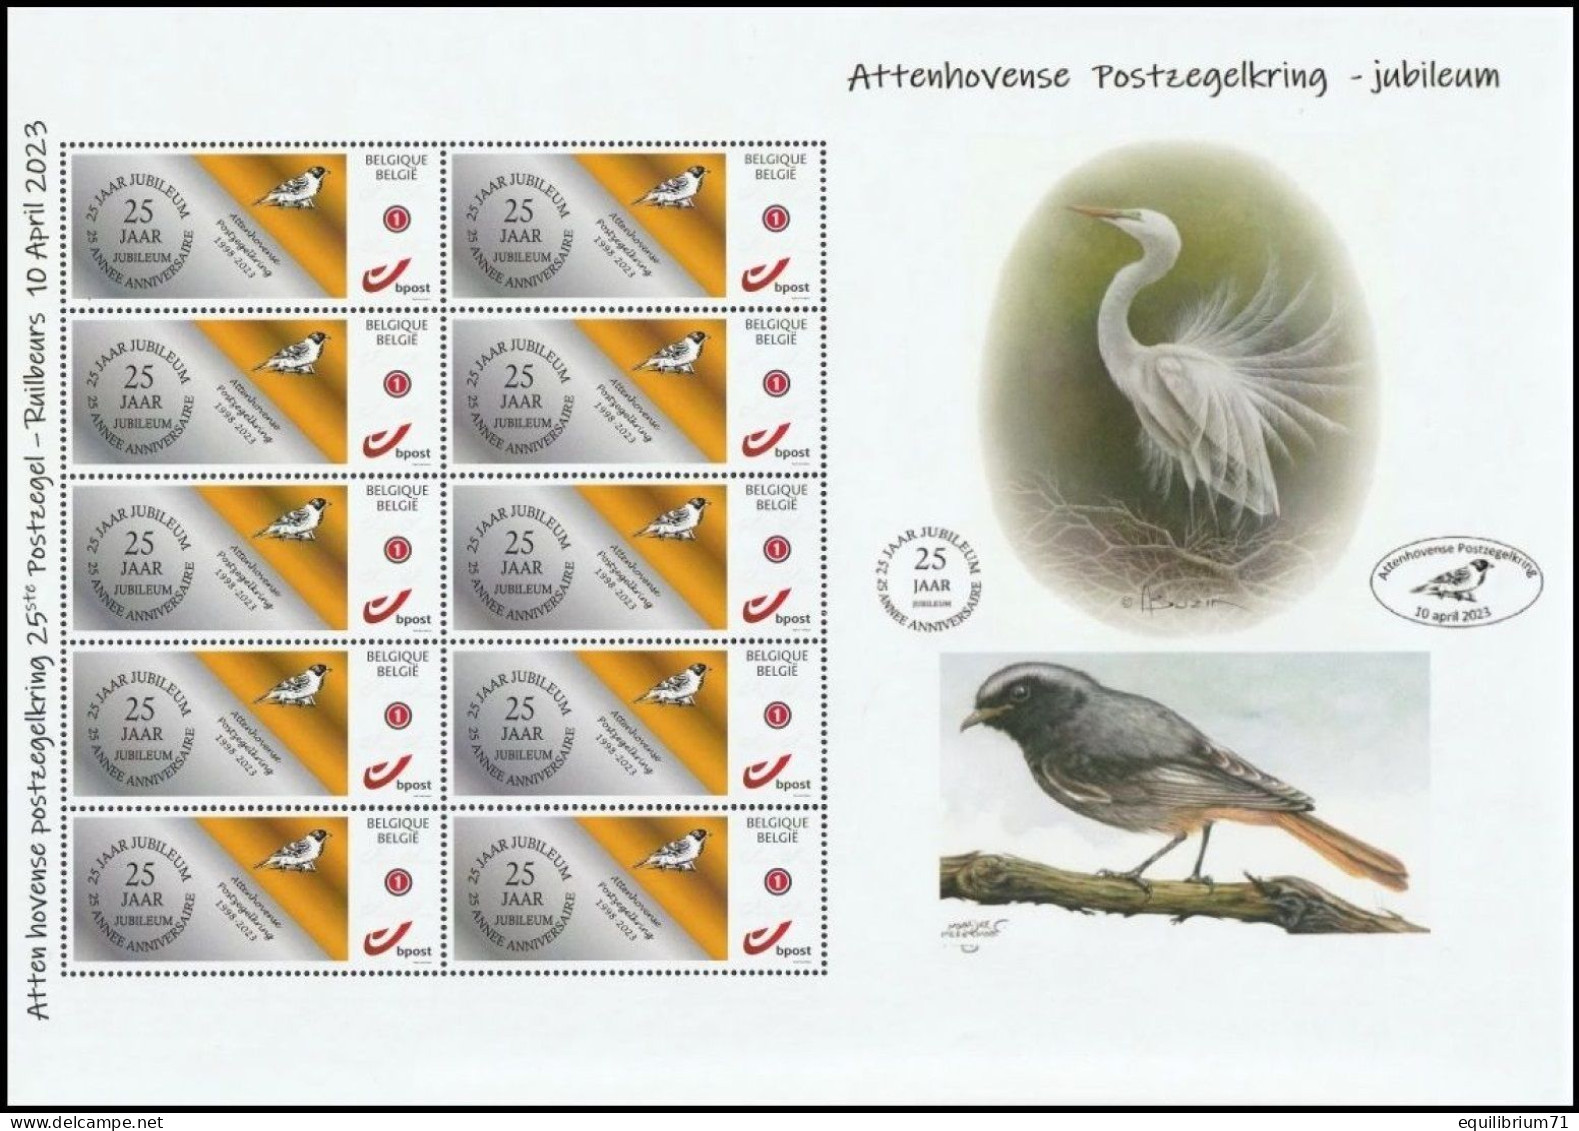 DUOSTAMP/MYSTAMP** - Cercle D'Ottoncourt / Attenhovense Postzegelkring - 1998-2023 - 25 Ans/jaar/jahre - Jubileum - RRR - Storchenvögel